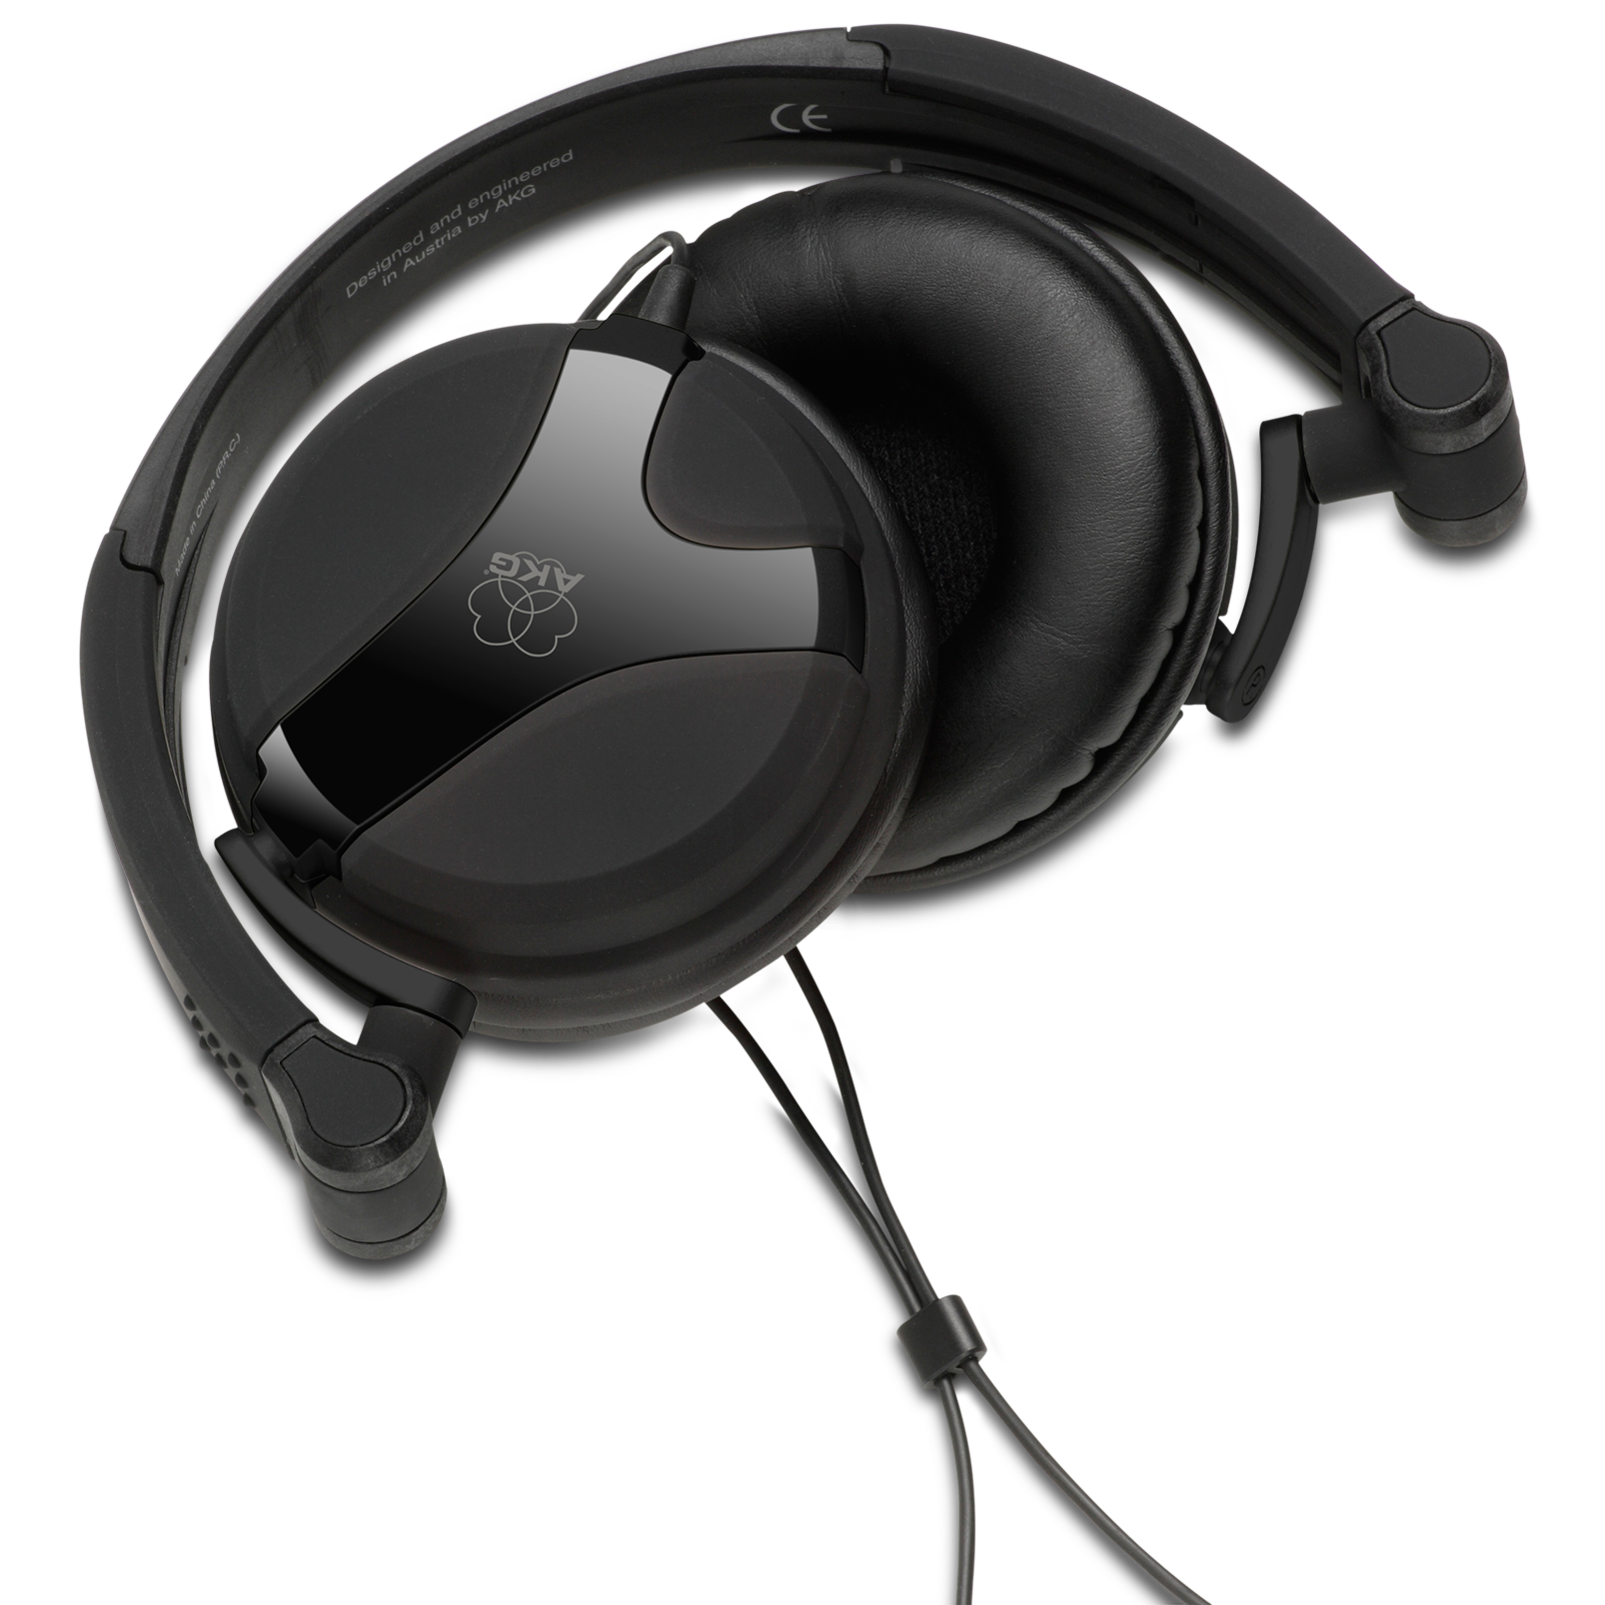 K 518 - Black - Stylish and portable performance DJ headphones - Detailshot 1